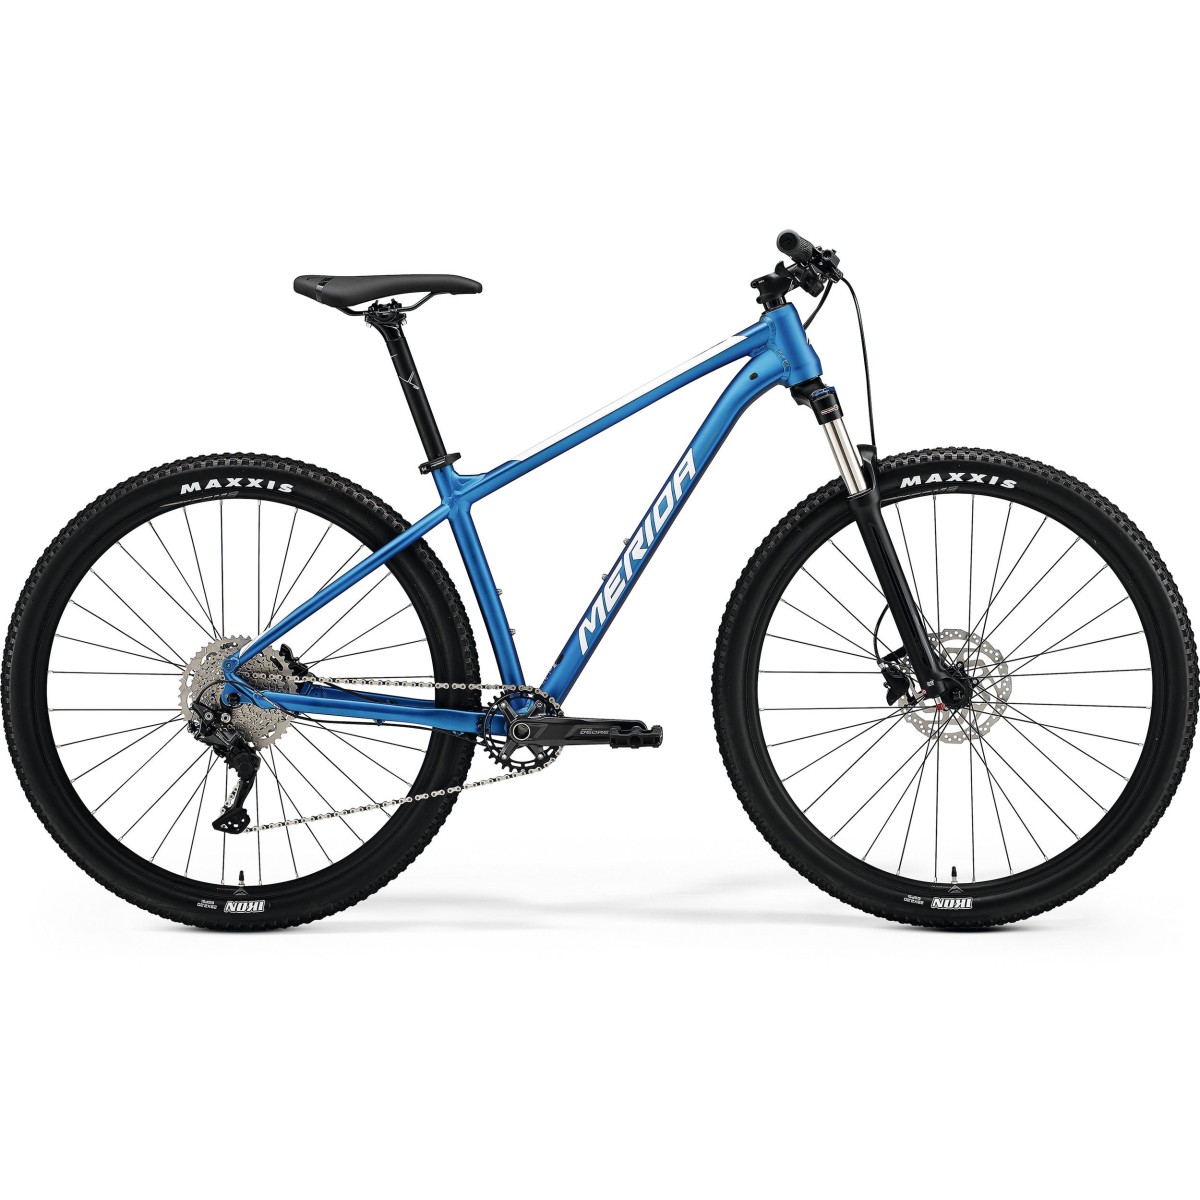 MERIDA BIG SEVEN 200 bicycle - blue